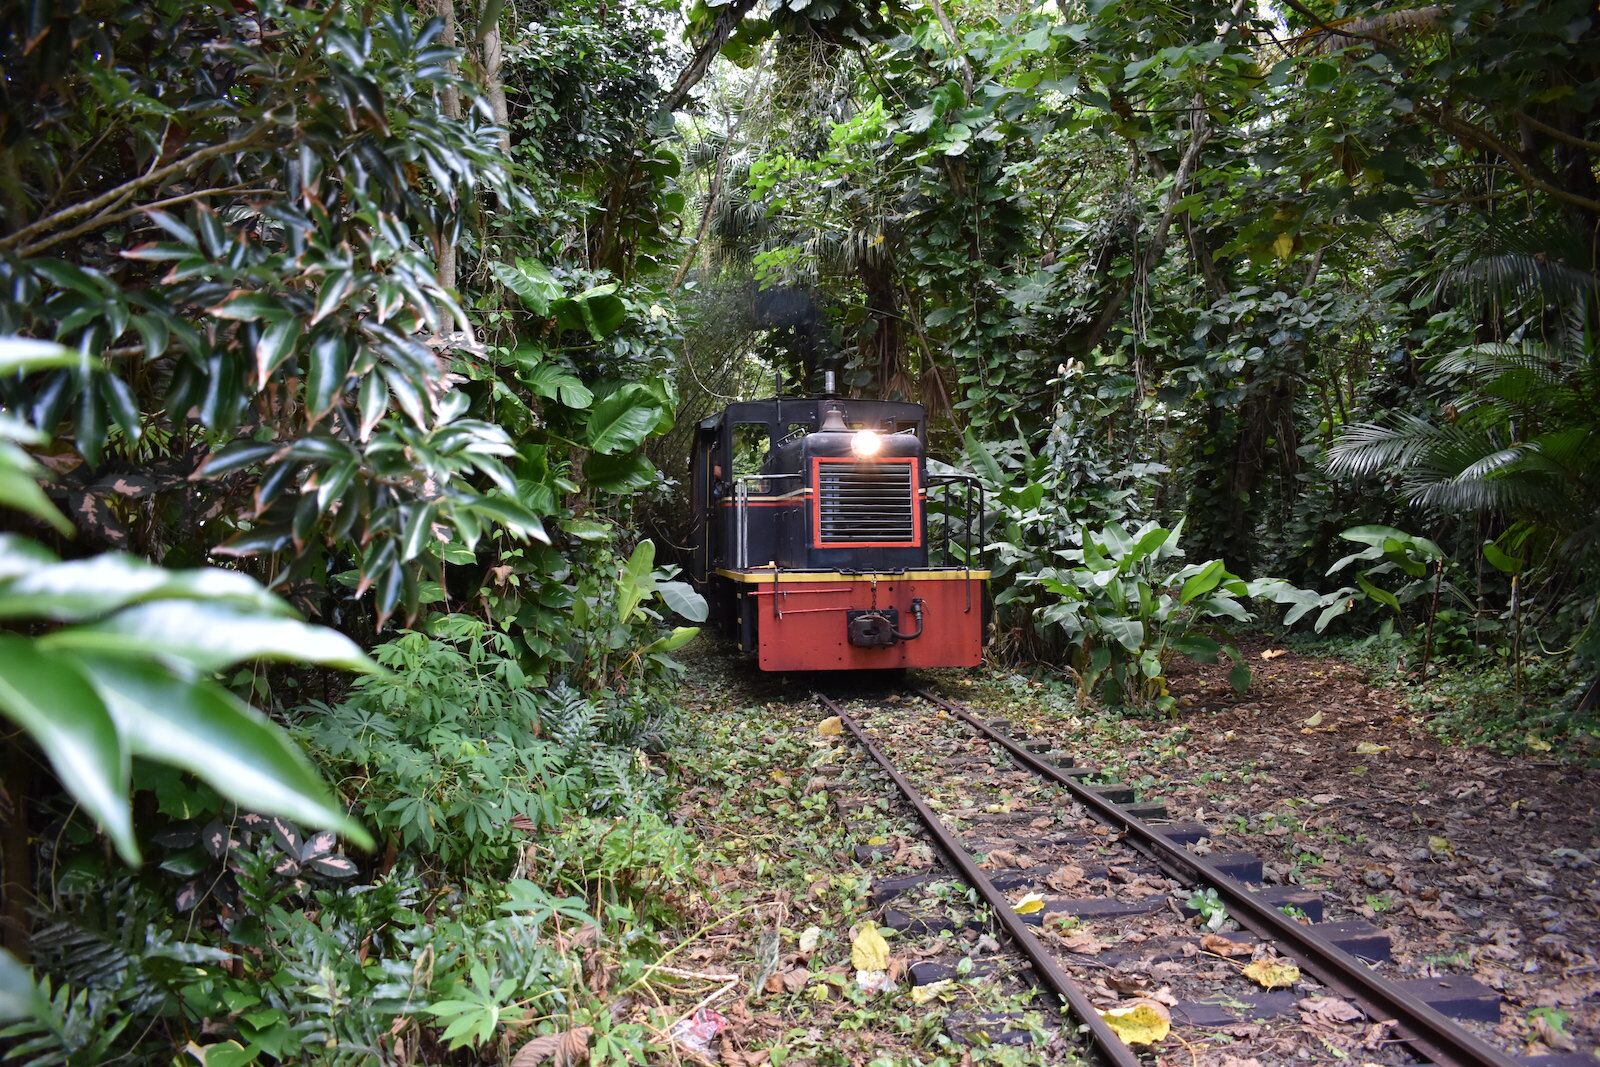 Hawaii trains: The Kauai Plantation train ride